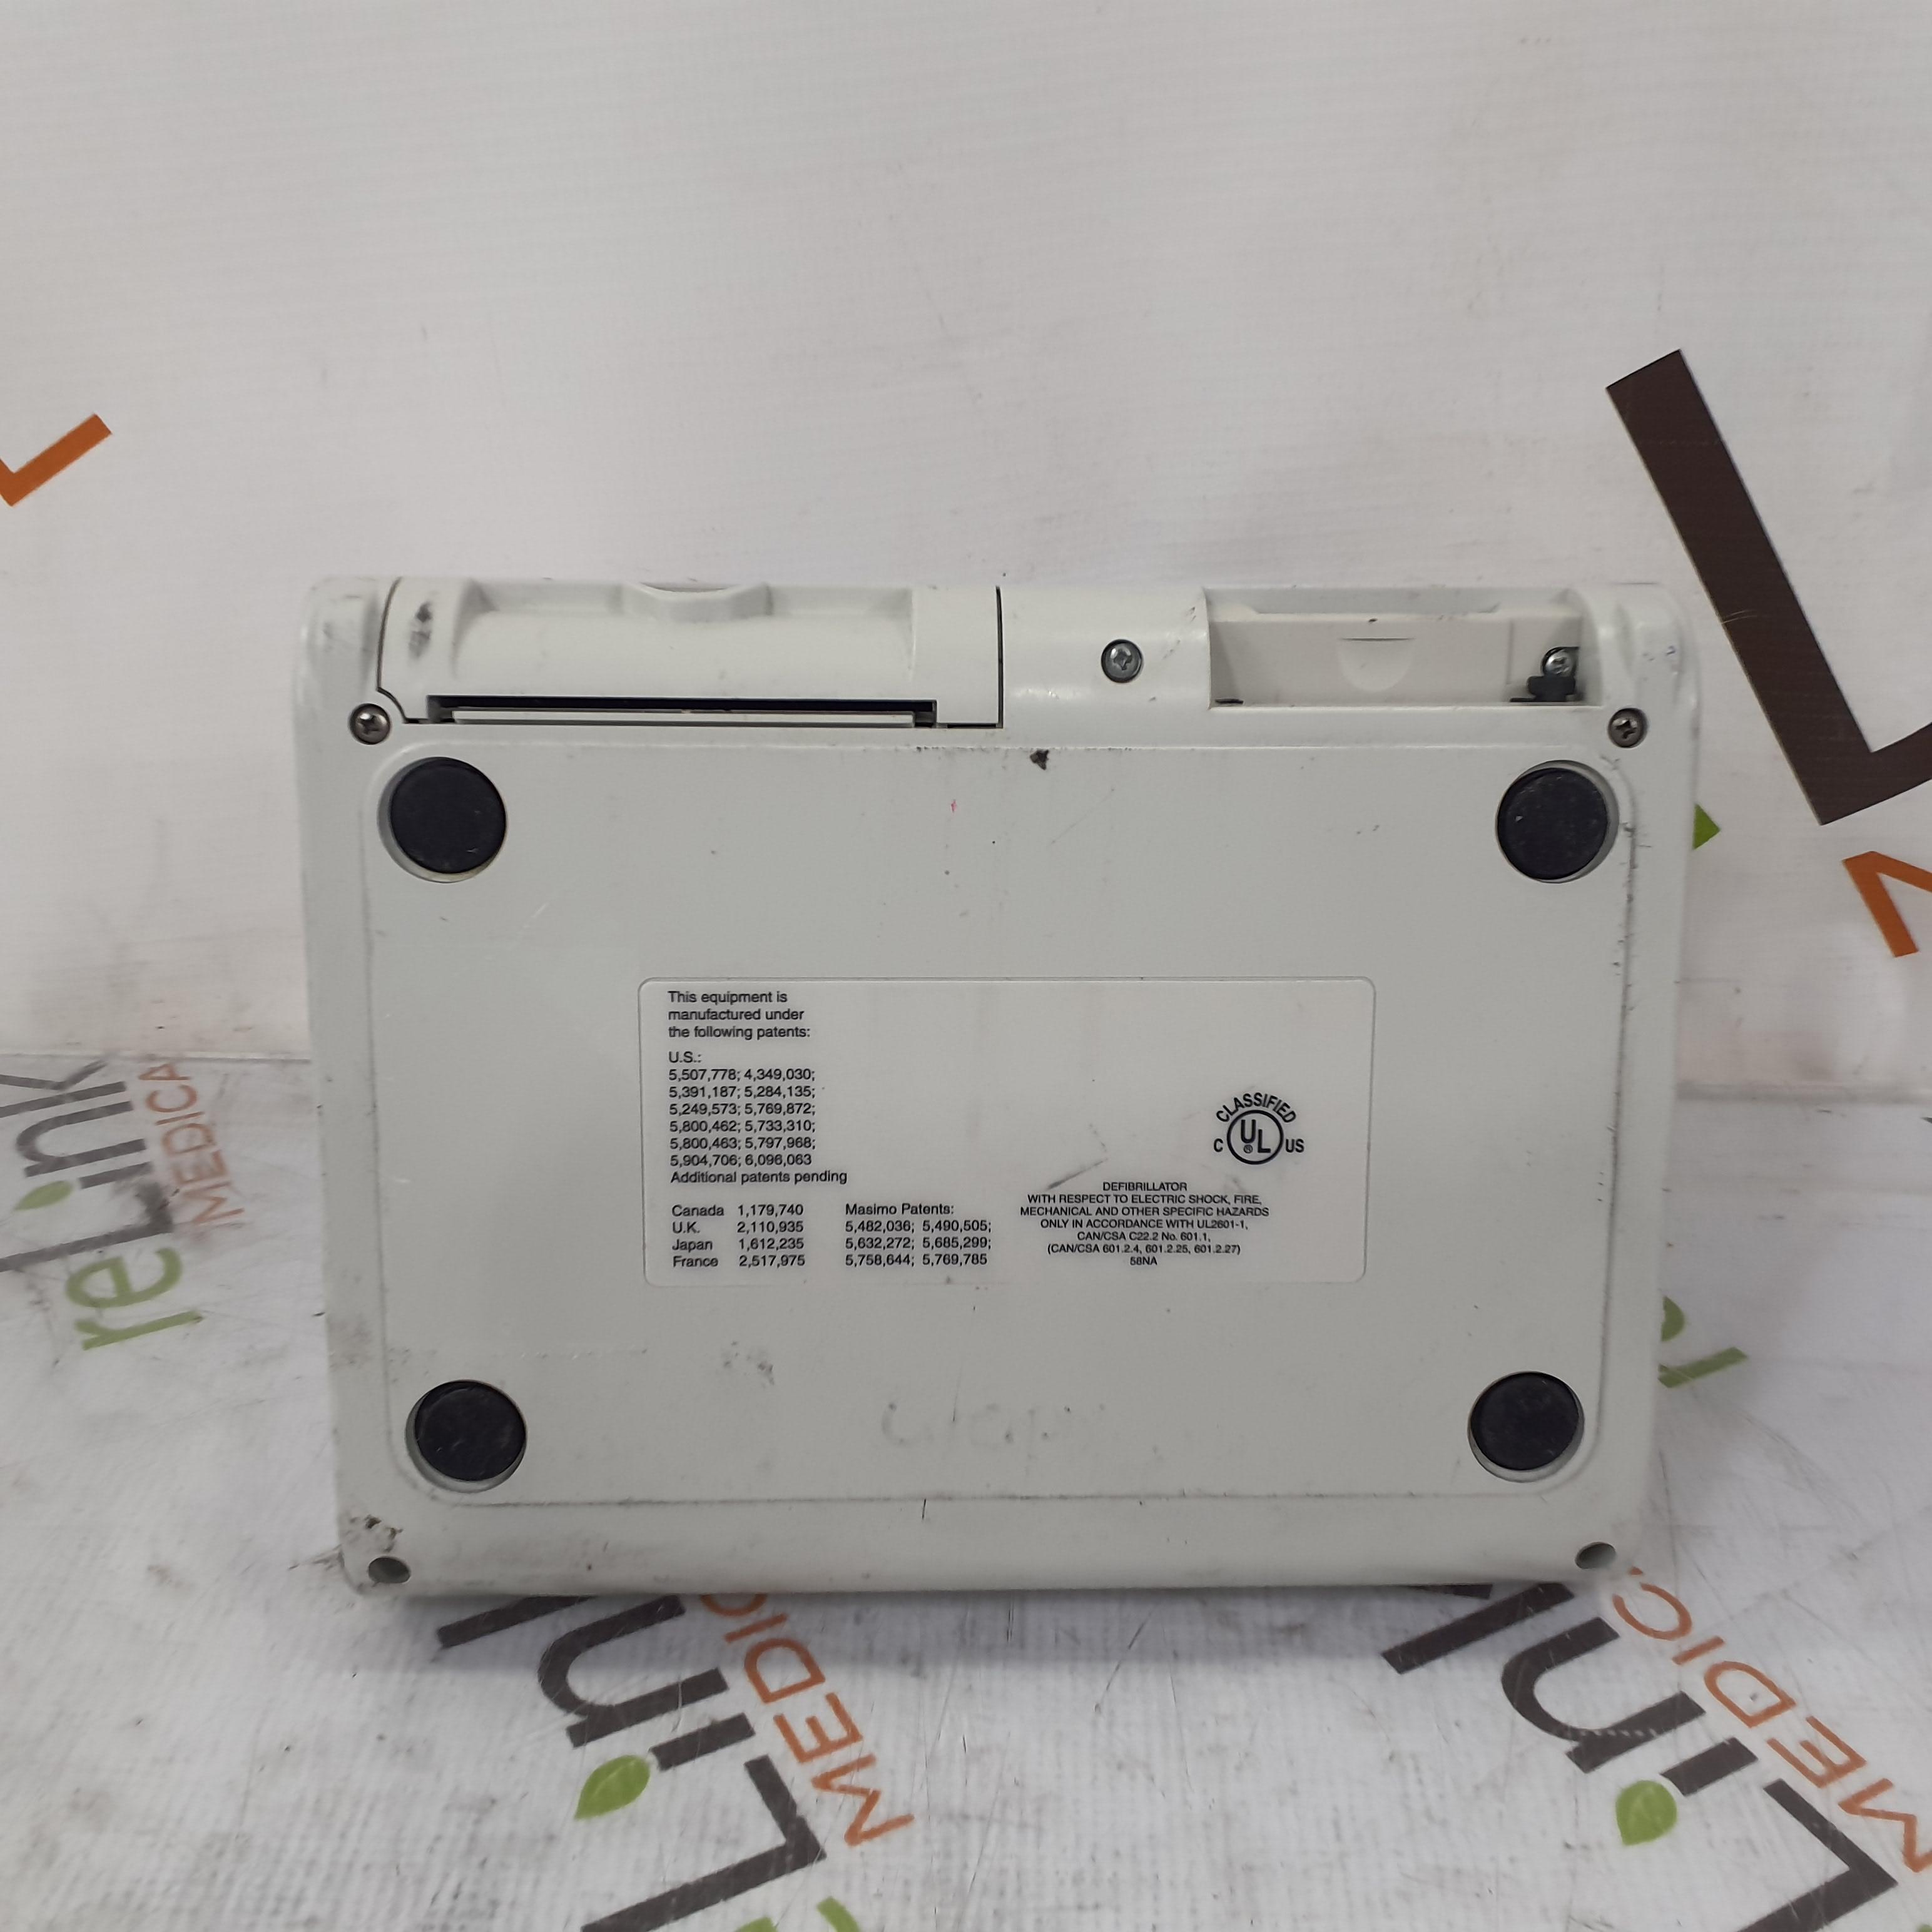 Zoll M Series Defibrillator - 397673